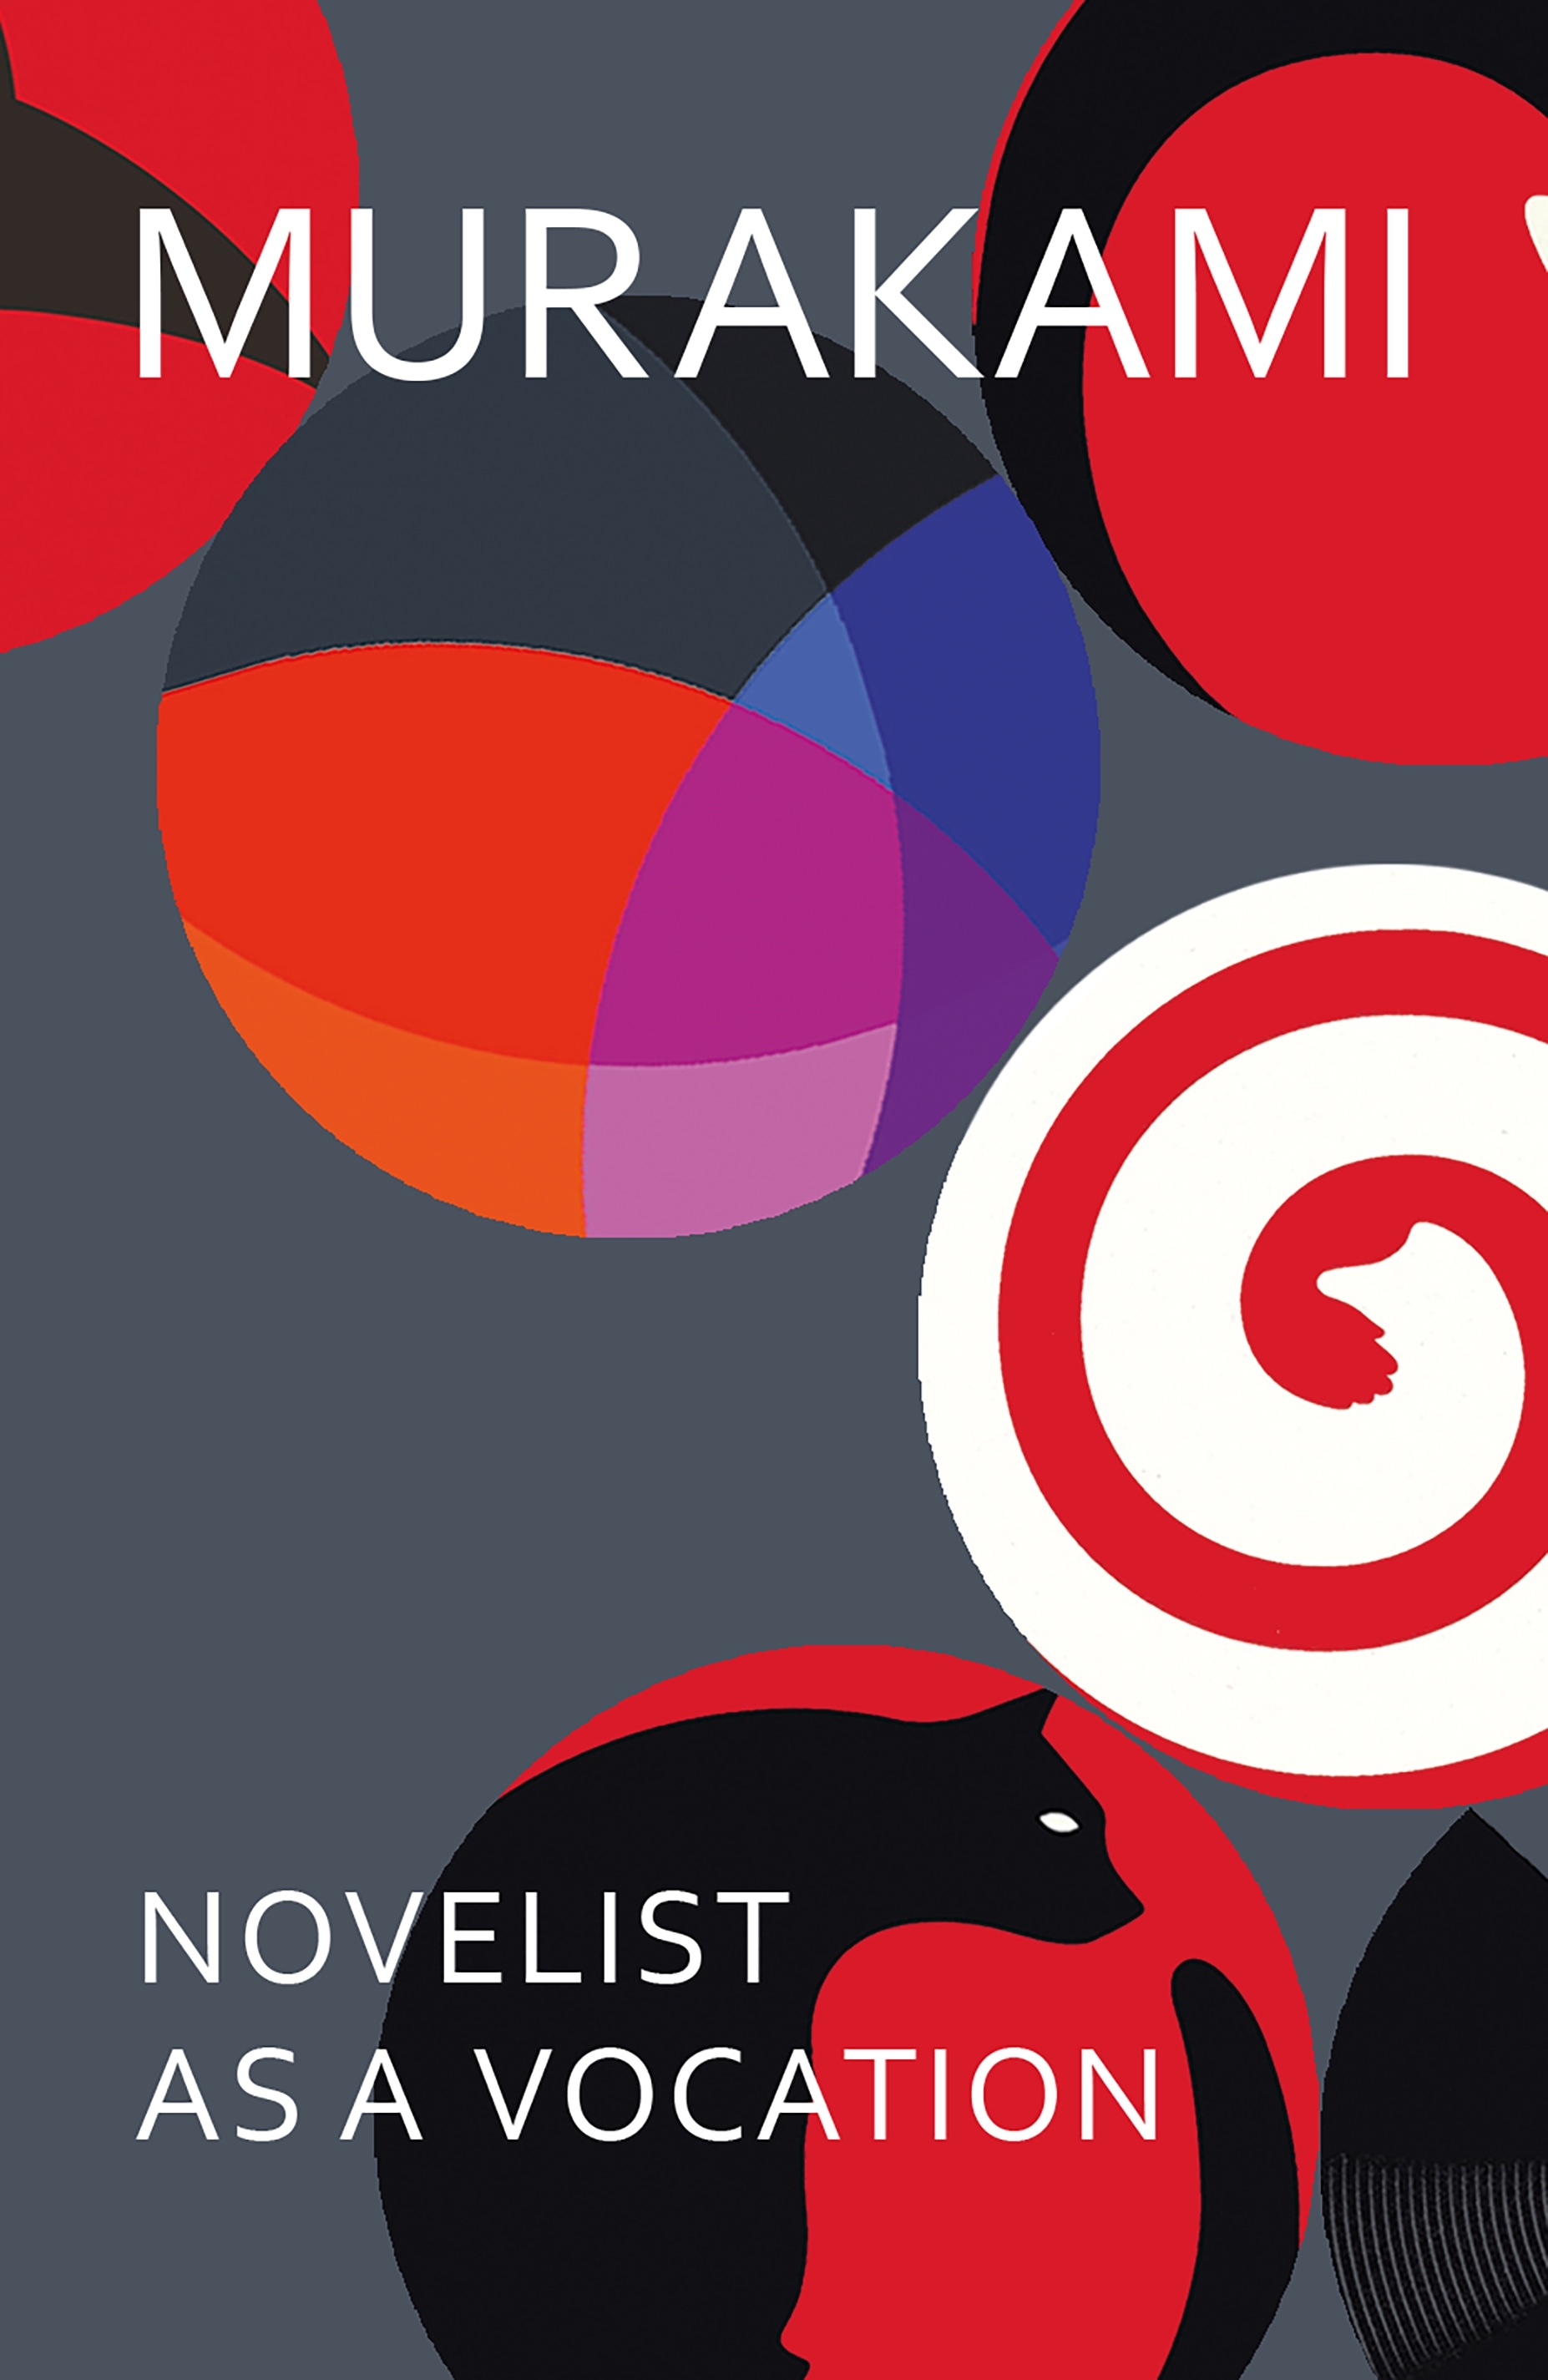 Book “Novelist as a Vocation” by Haruki Murakami — November 8, 2022